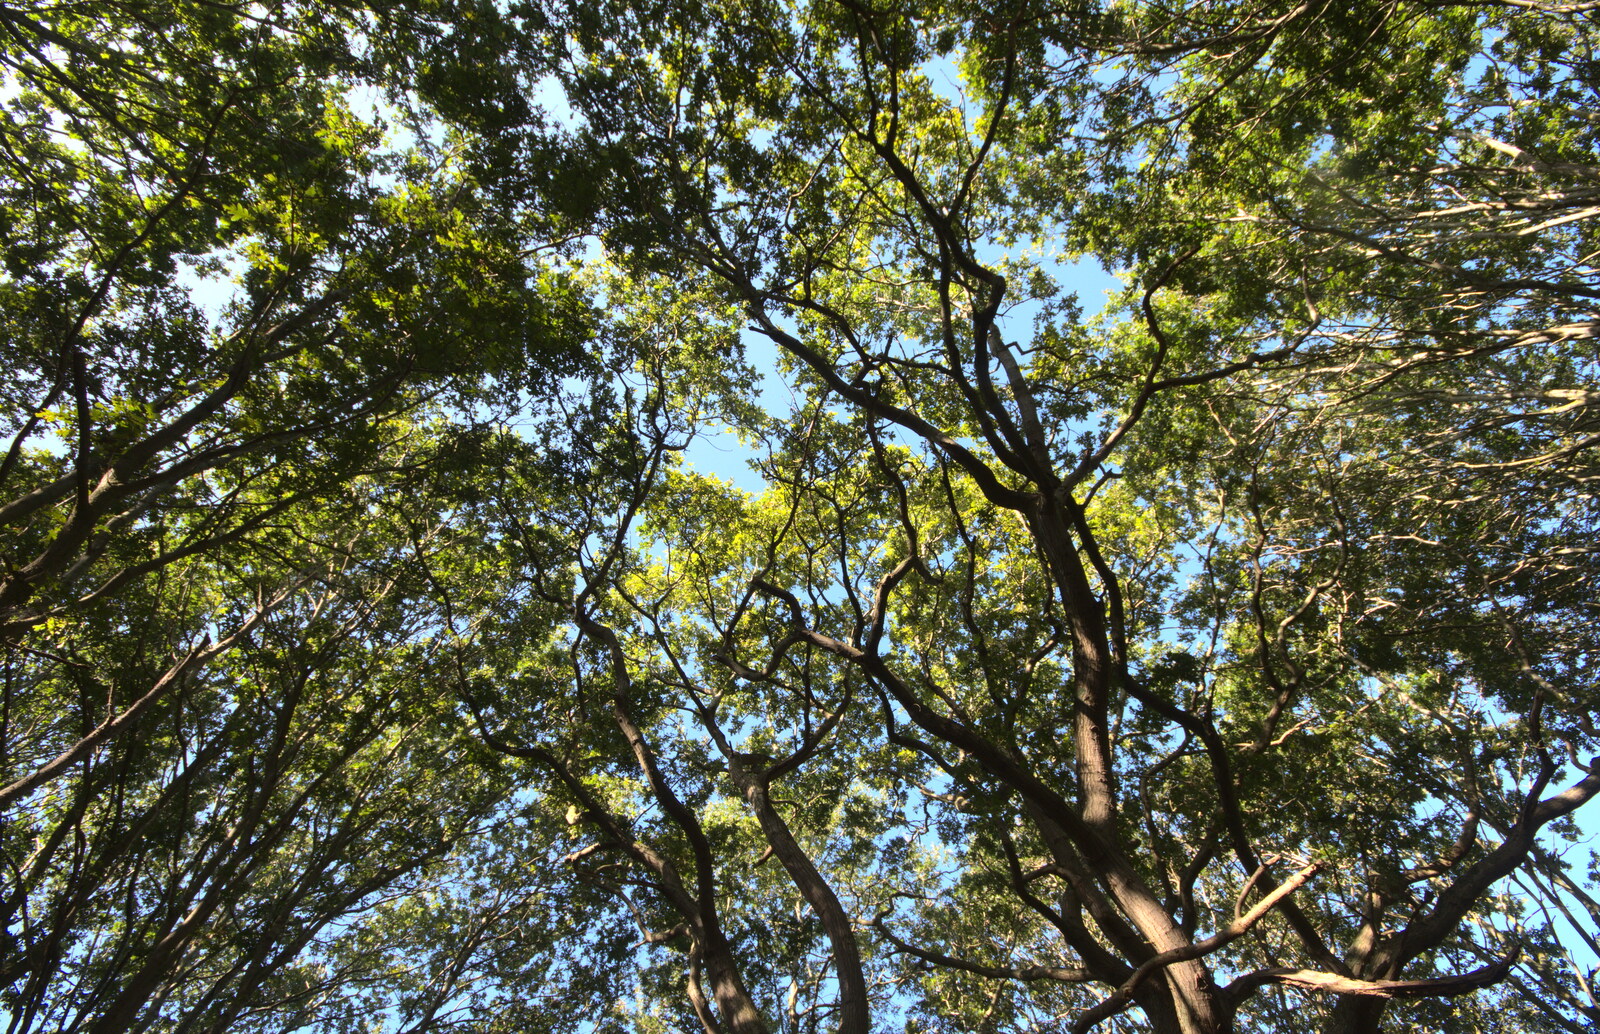 The tree canopy looks like Ausralian eucalyptus from A Sail Fitting, Billingford Windmill, Billingford, Norfolk - 20th August 2020